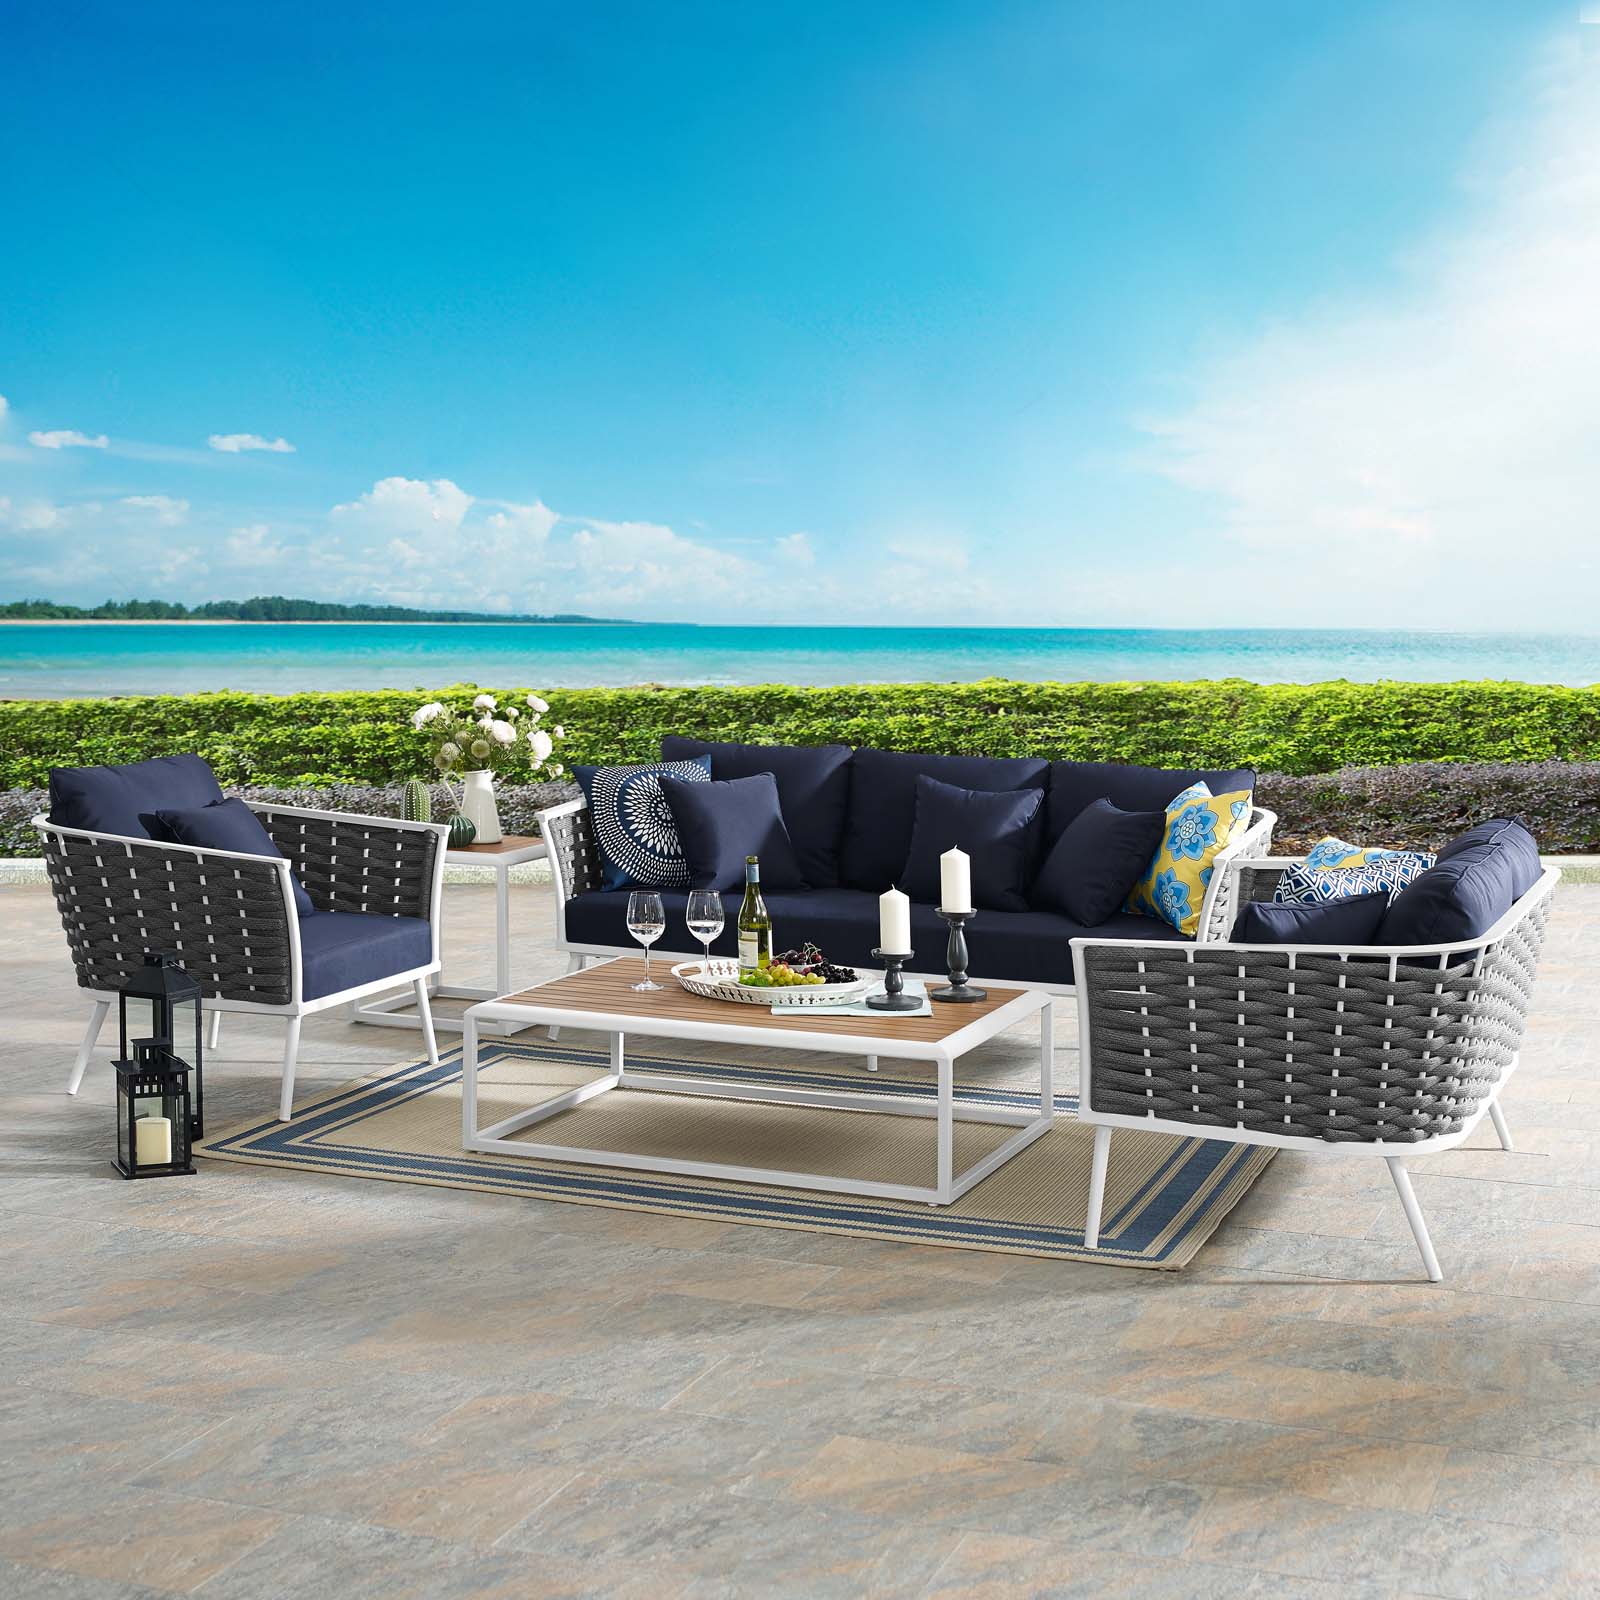 Modern Contemporary Urban Design Outdoor Patio Balcony Garden Furniture Lounge Chair, Sofa and Table Set, Fabric Aluminium, White Navy - image 2 of 8